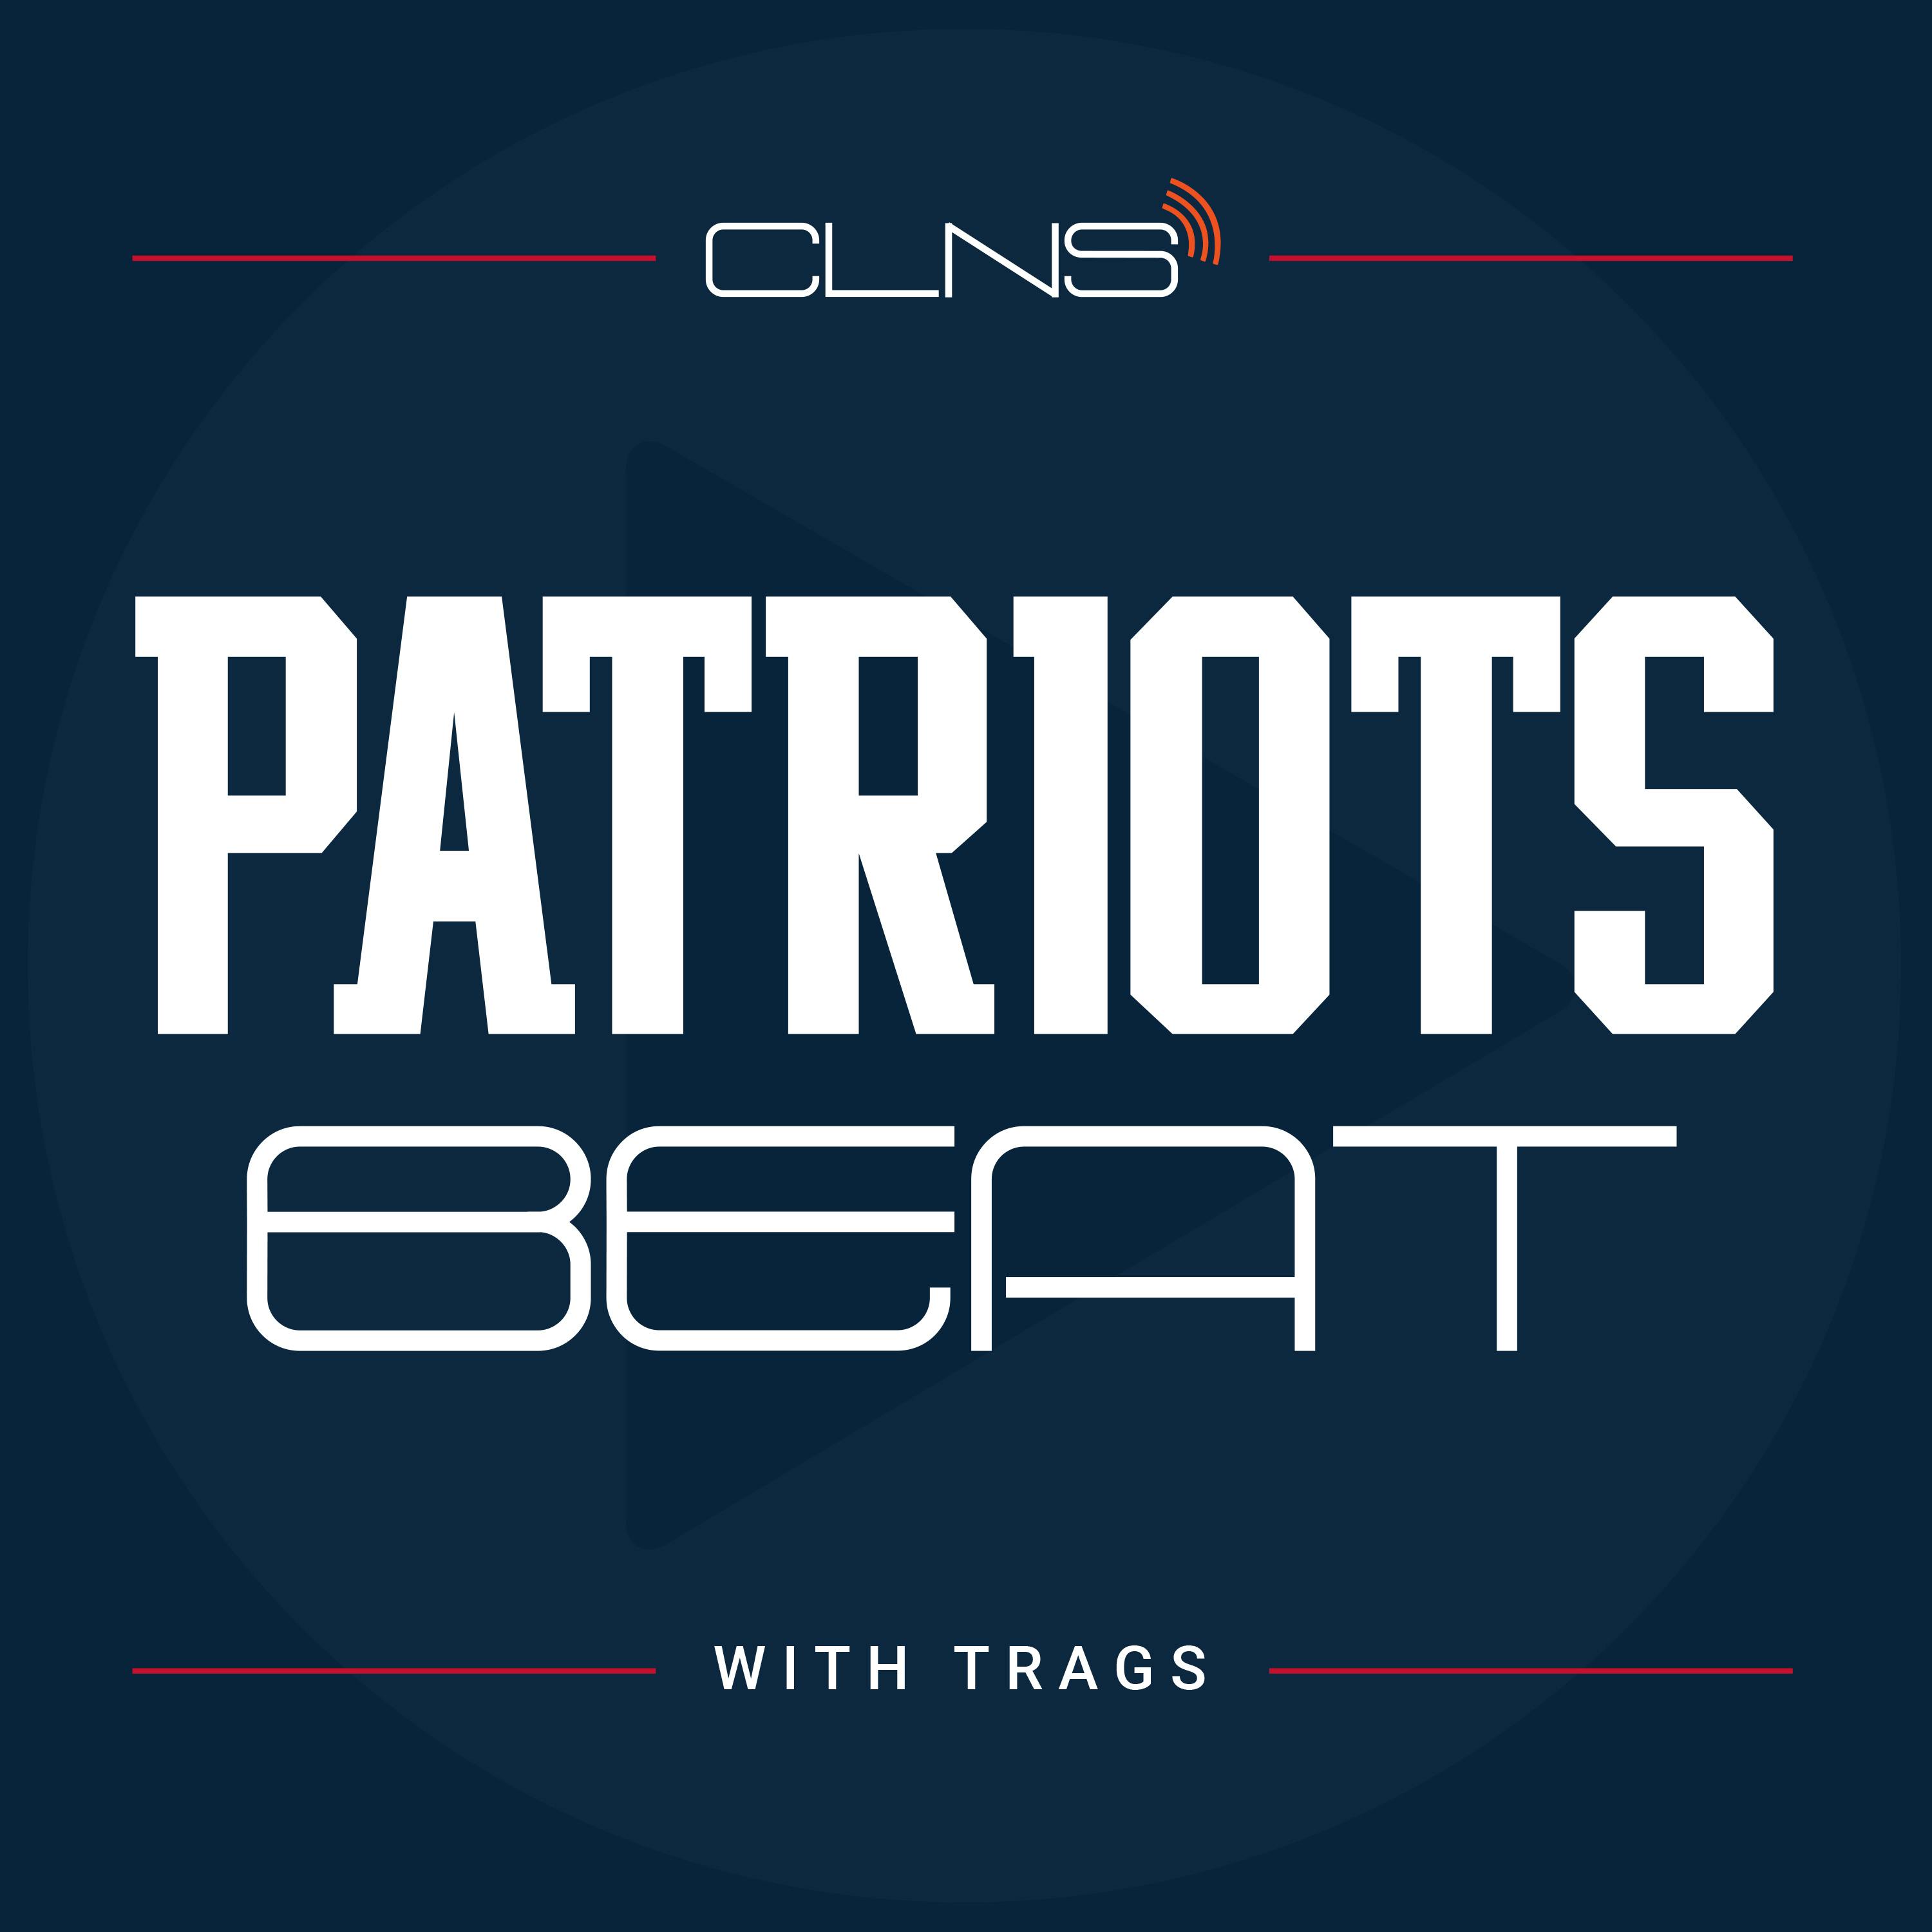 329: Are the Patriots getting back on track? w/ Zack Cox